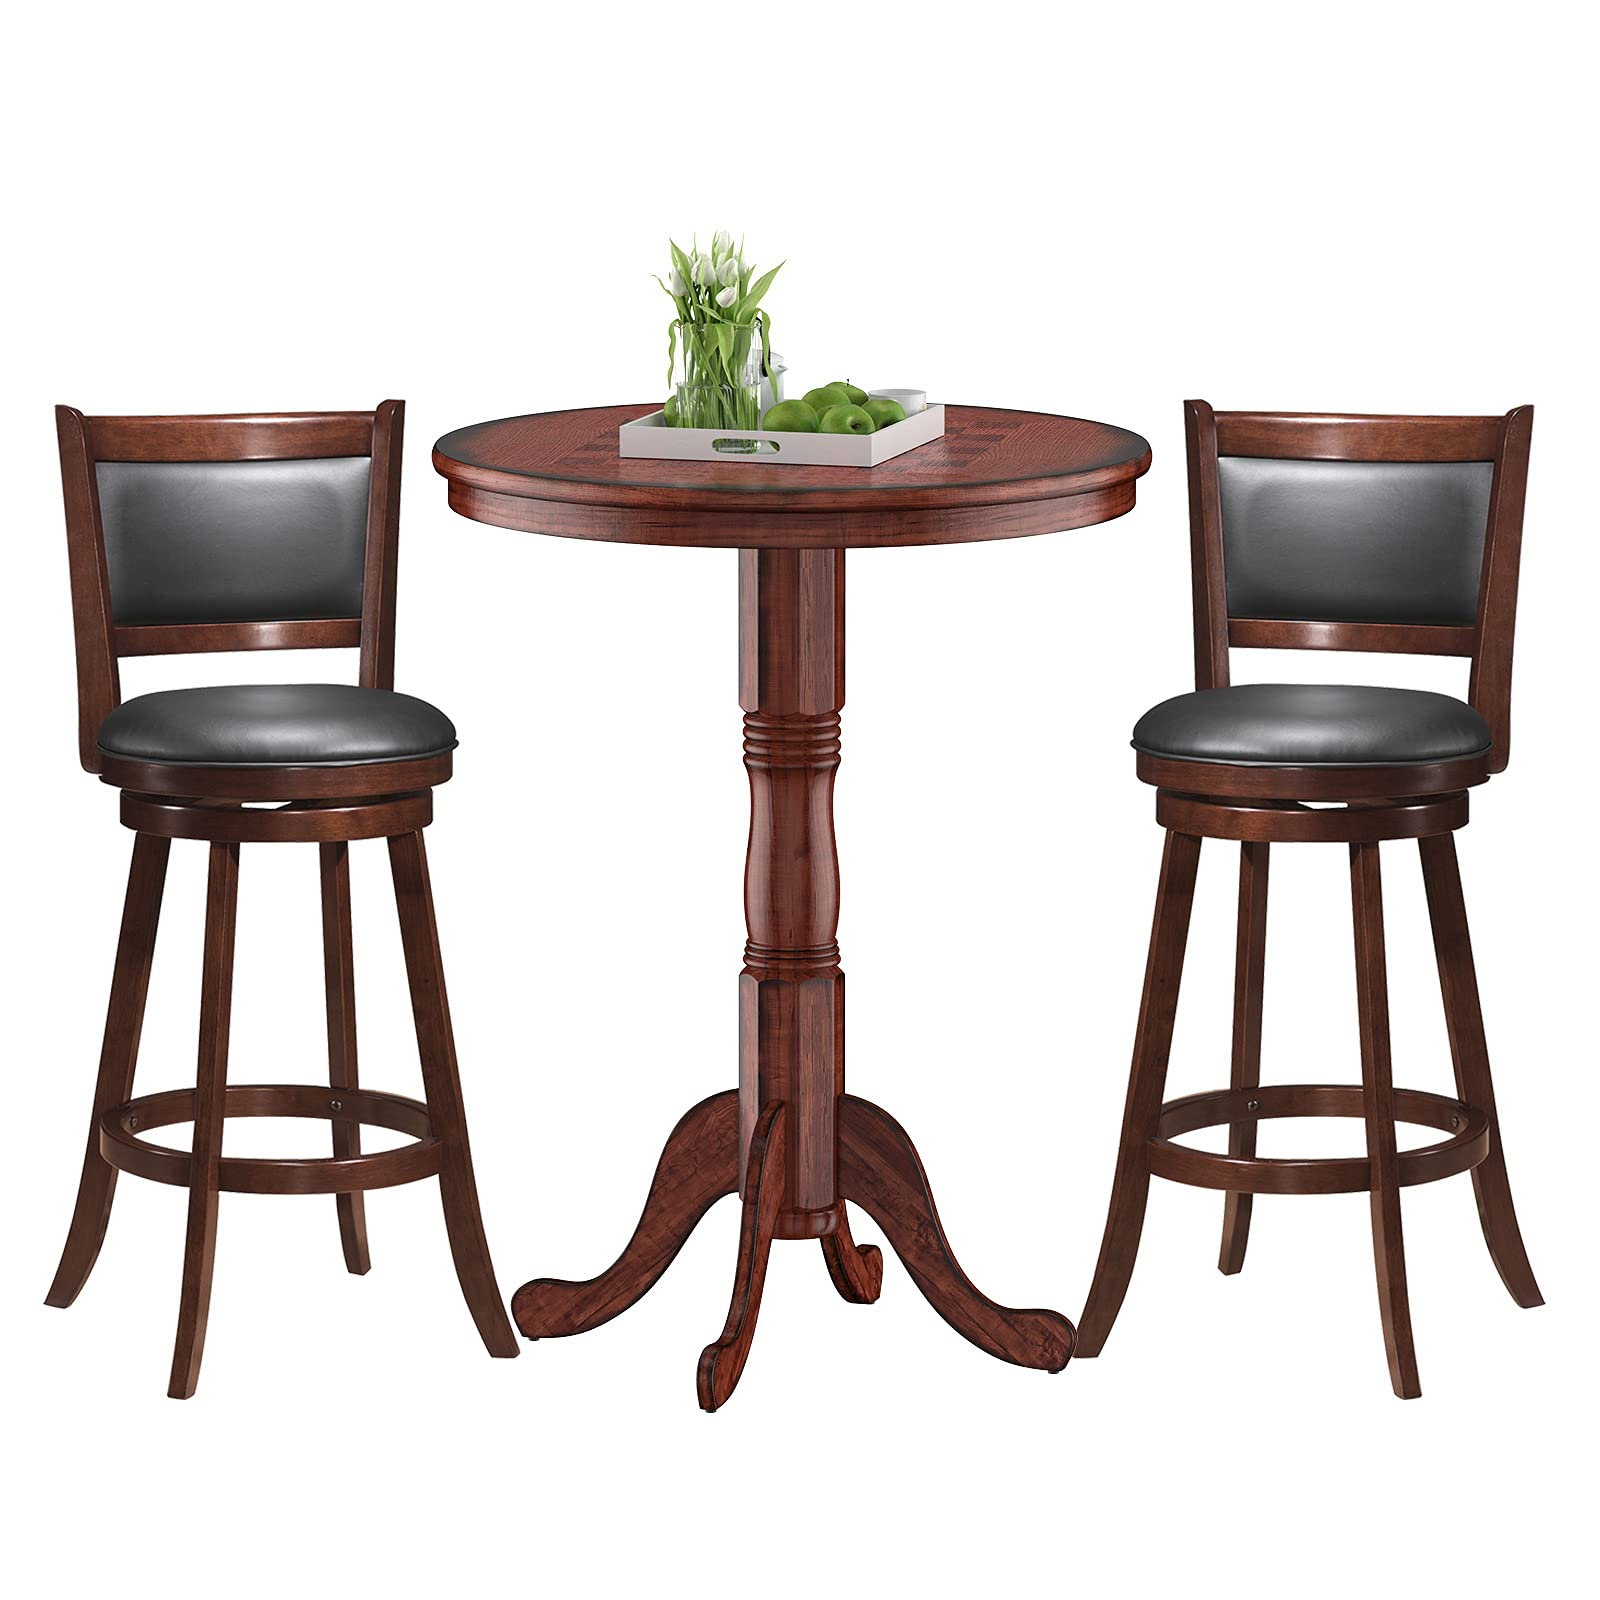 Giantex 3 Pcs Pub Table Set, Wooden Pub Pedestal Side Table w/Stable Base